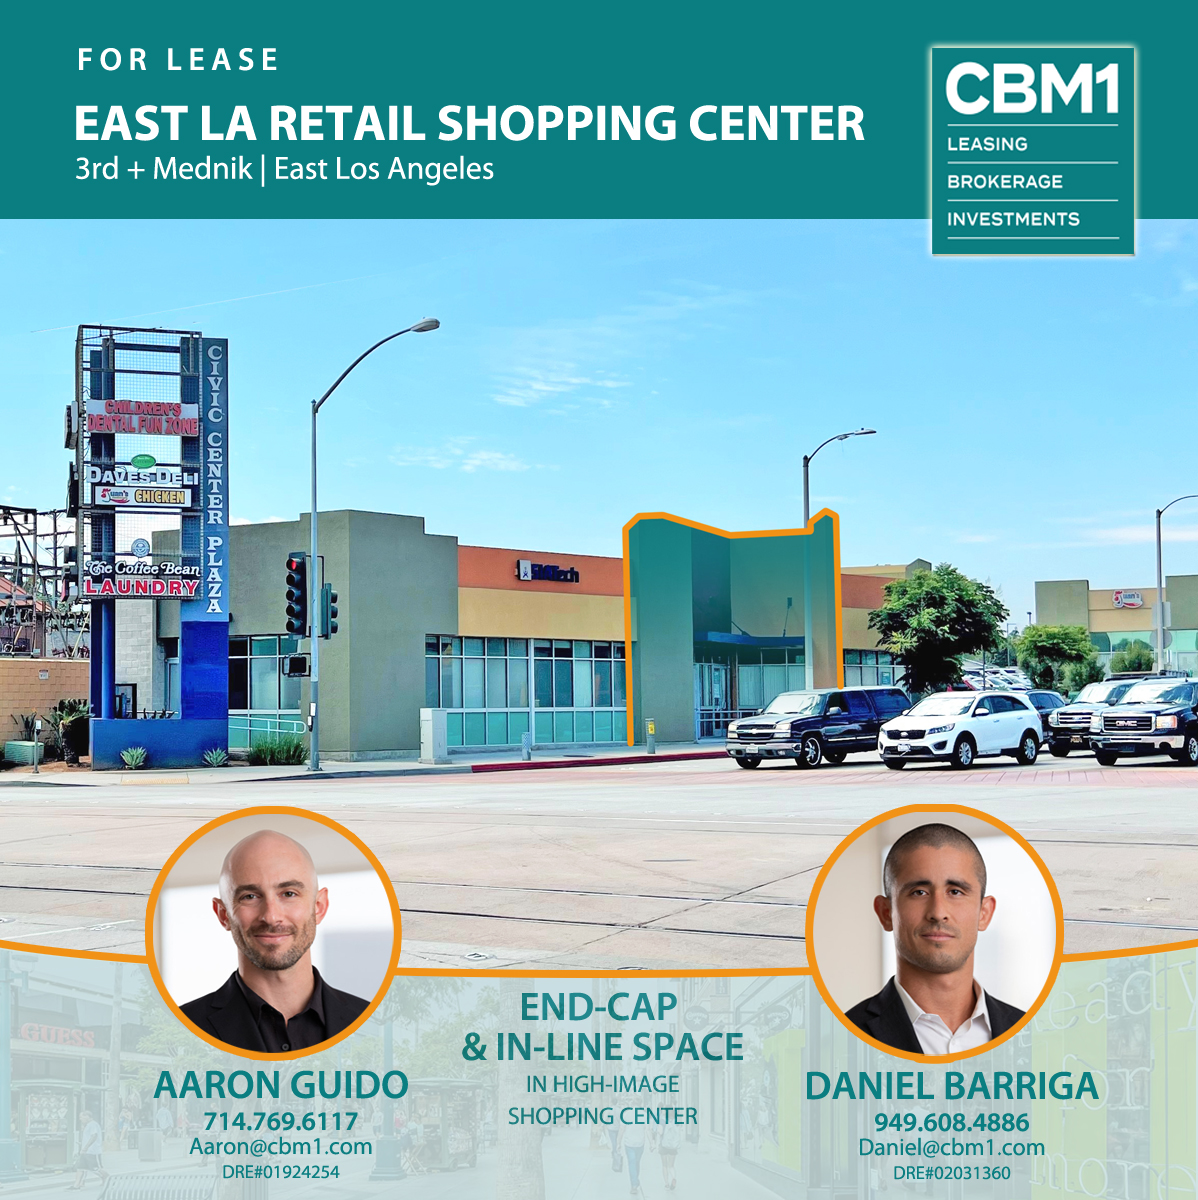 End-cap and in-line space for lease at 3rd + Mednik in prime East Los Angeles. #cbm1 #cre #retailleasing #retailrealestate #eastlosangeles #3rdandmednik #eastla #eastlaciviccenter